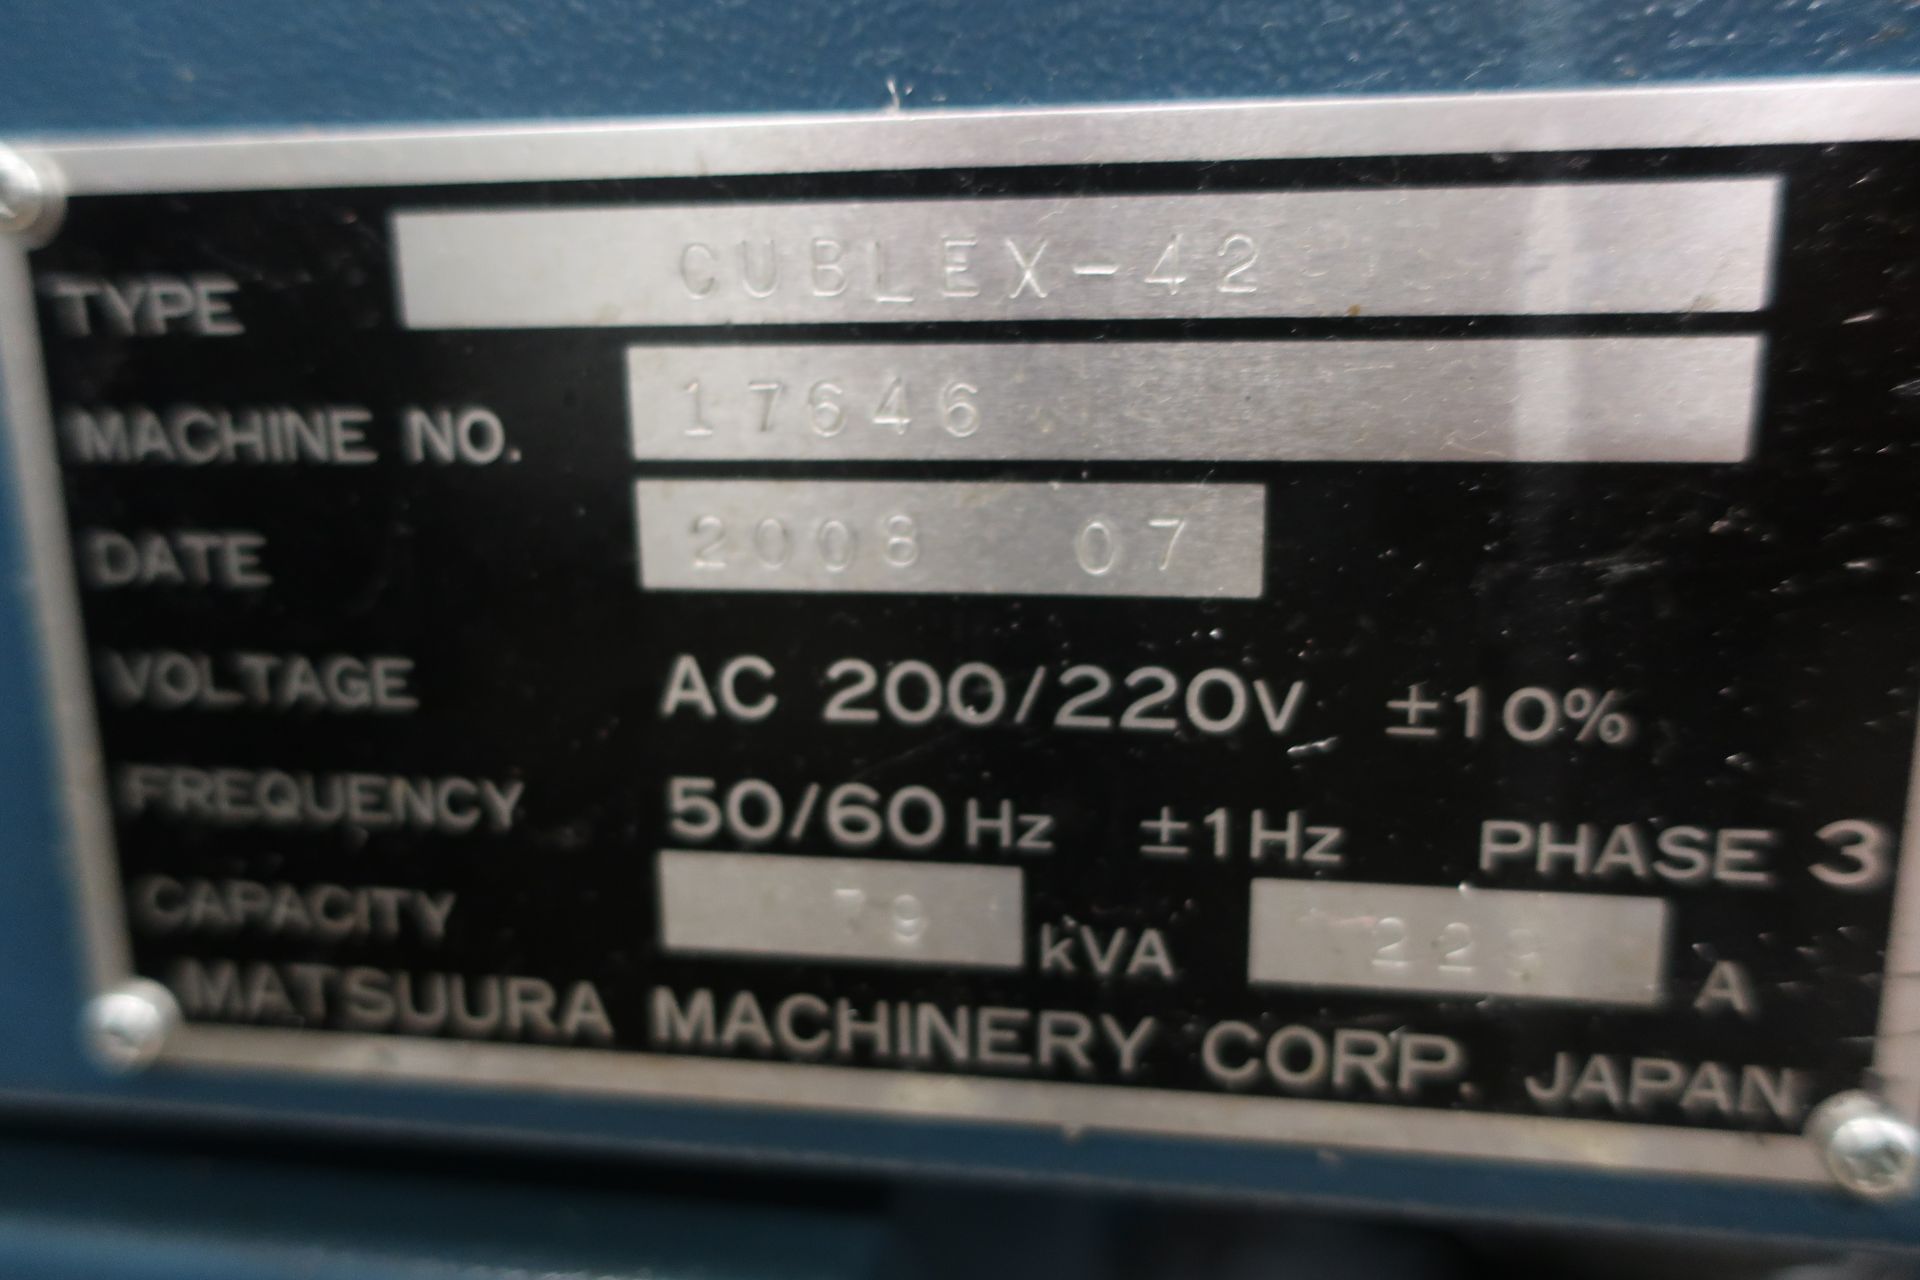 MATSUURA CUBLEX-42 CP24 5-AXIS CNC MACHINING CENTER, SN 17646, NEW 2008 - Image 23 of 25